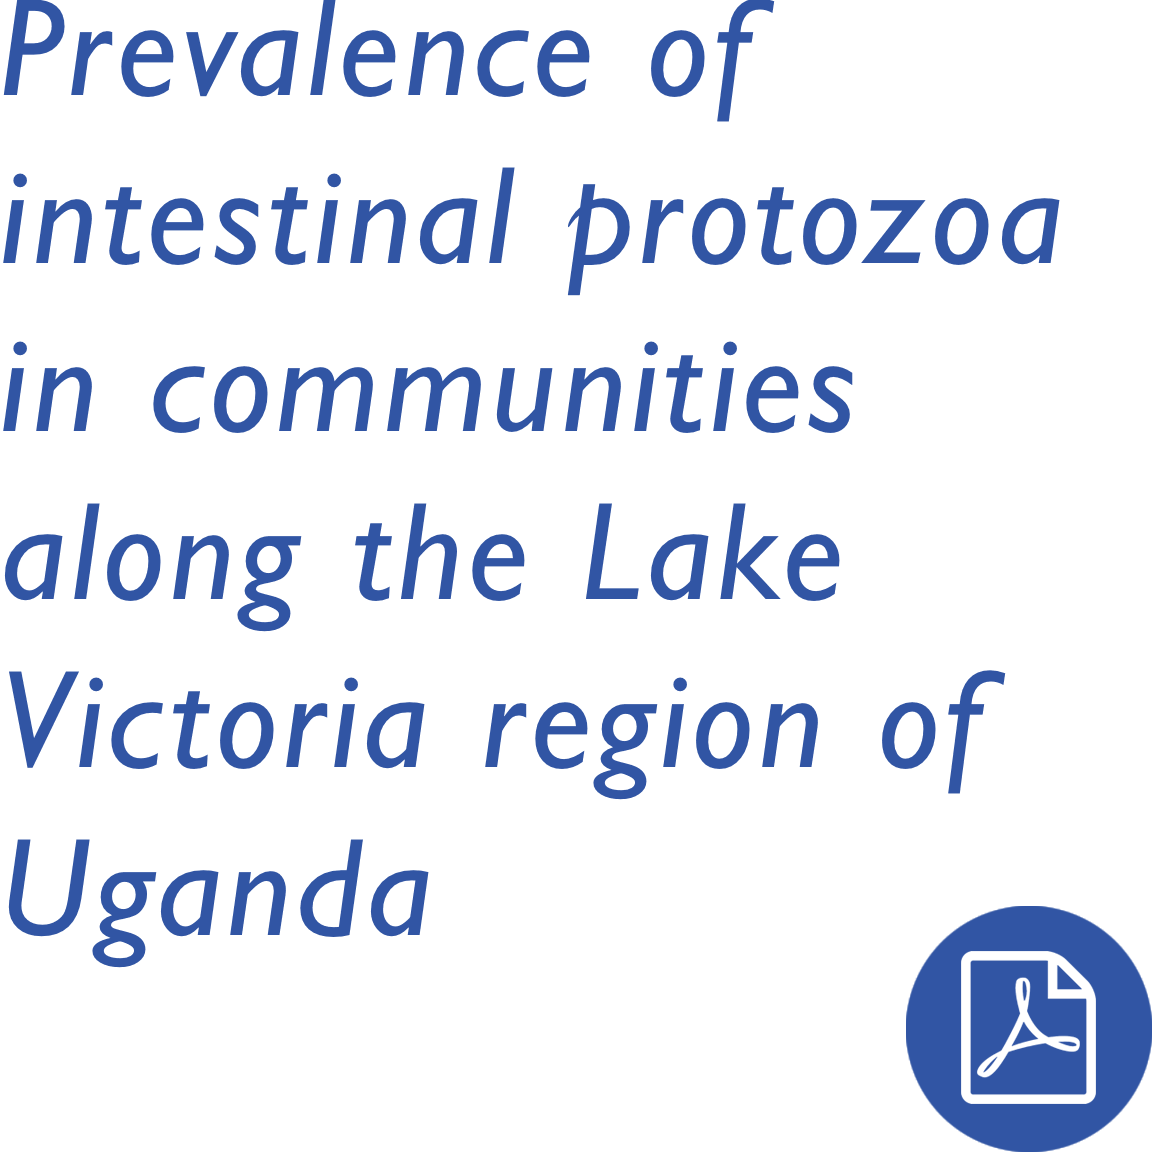 Prevalence of intestinal protozoa in communities along the Lake Victoria region of Uganda